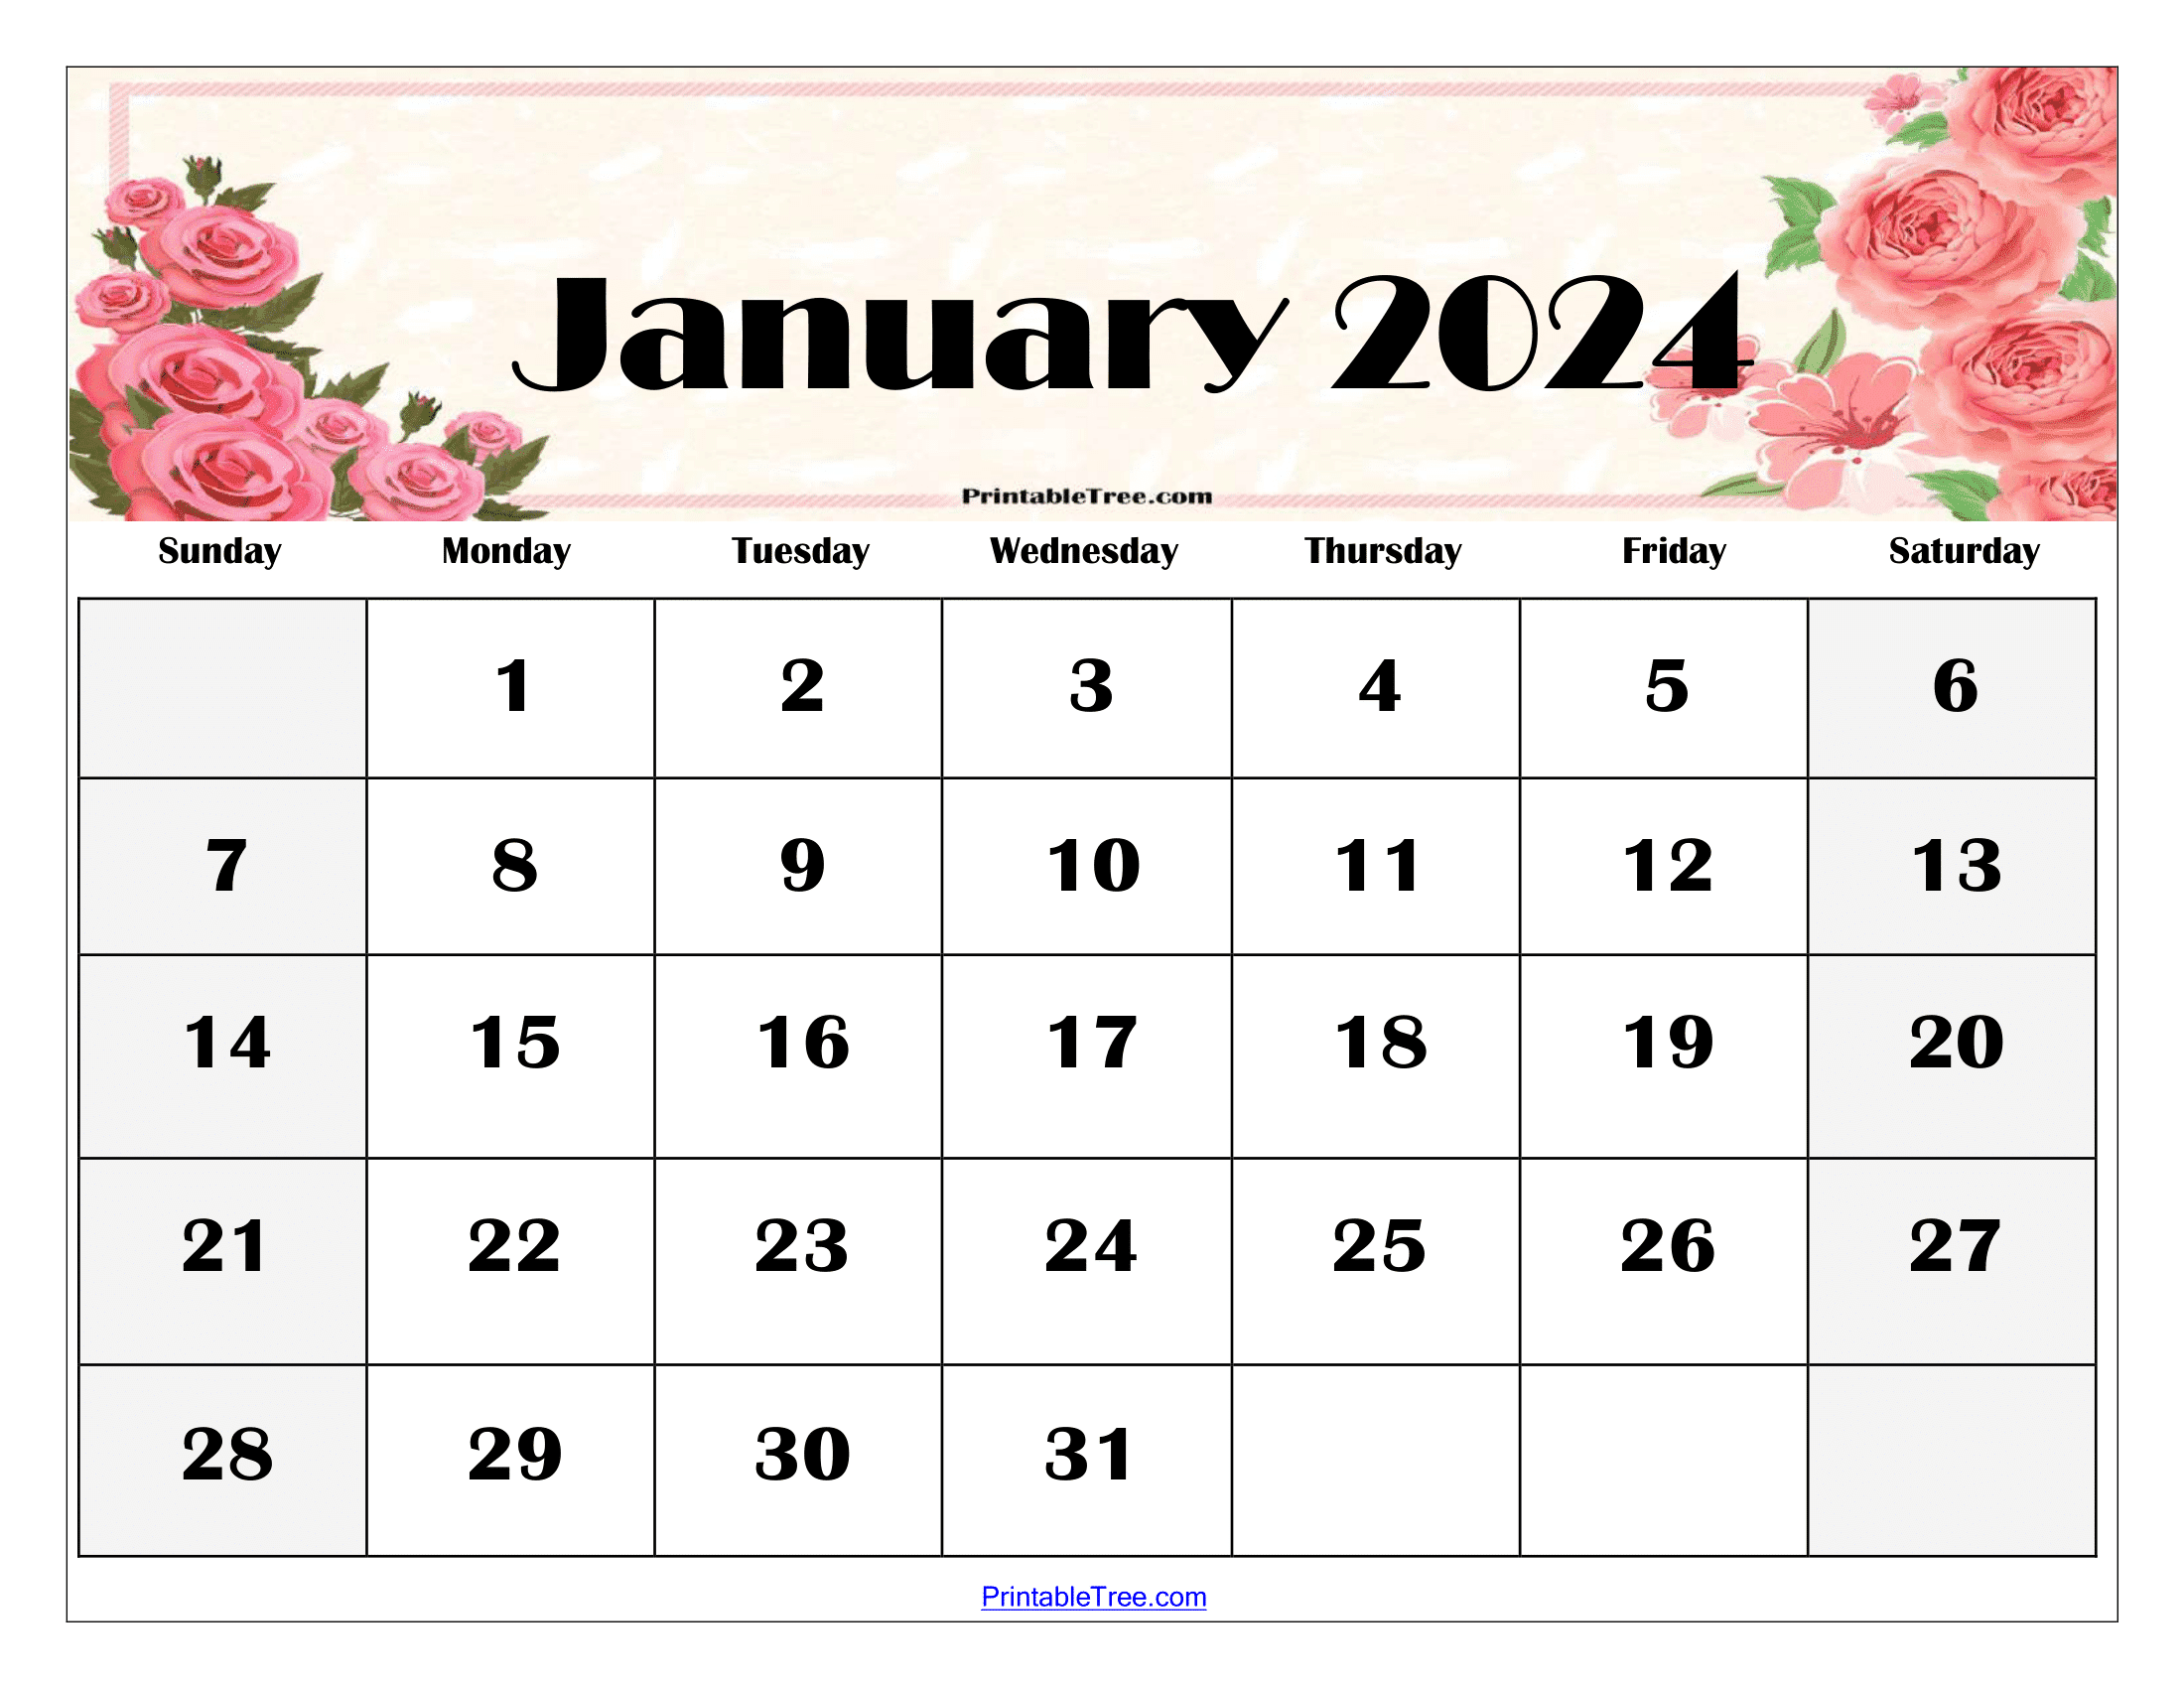 January 2024 Calendar Printable PDF Template With Holidays - Free Printable 2024 Floral Calendar